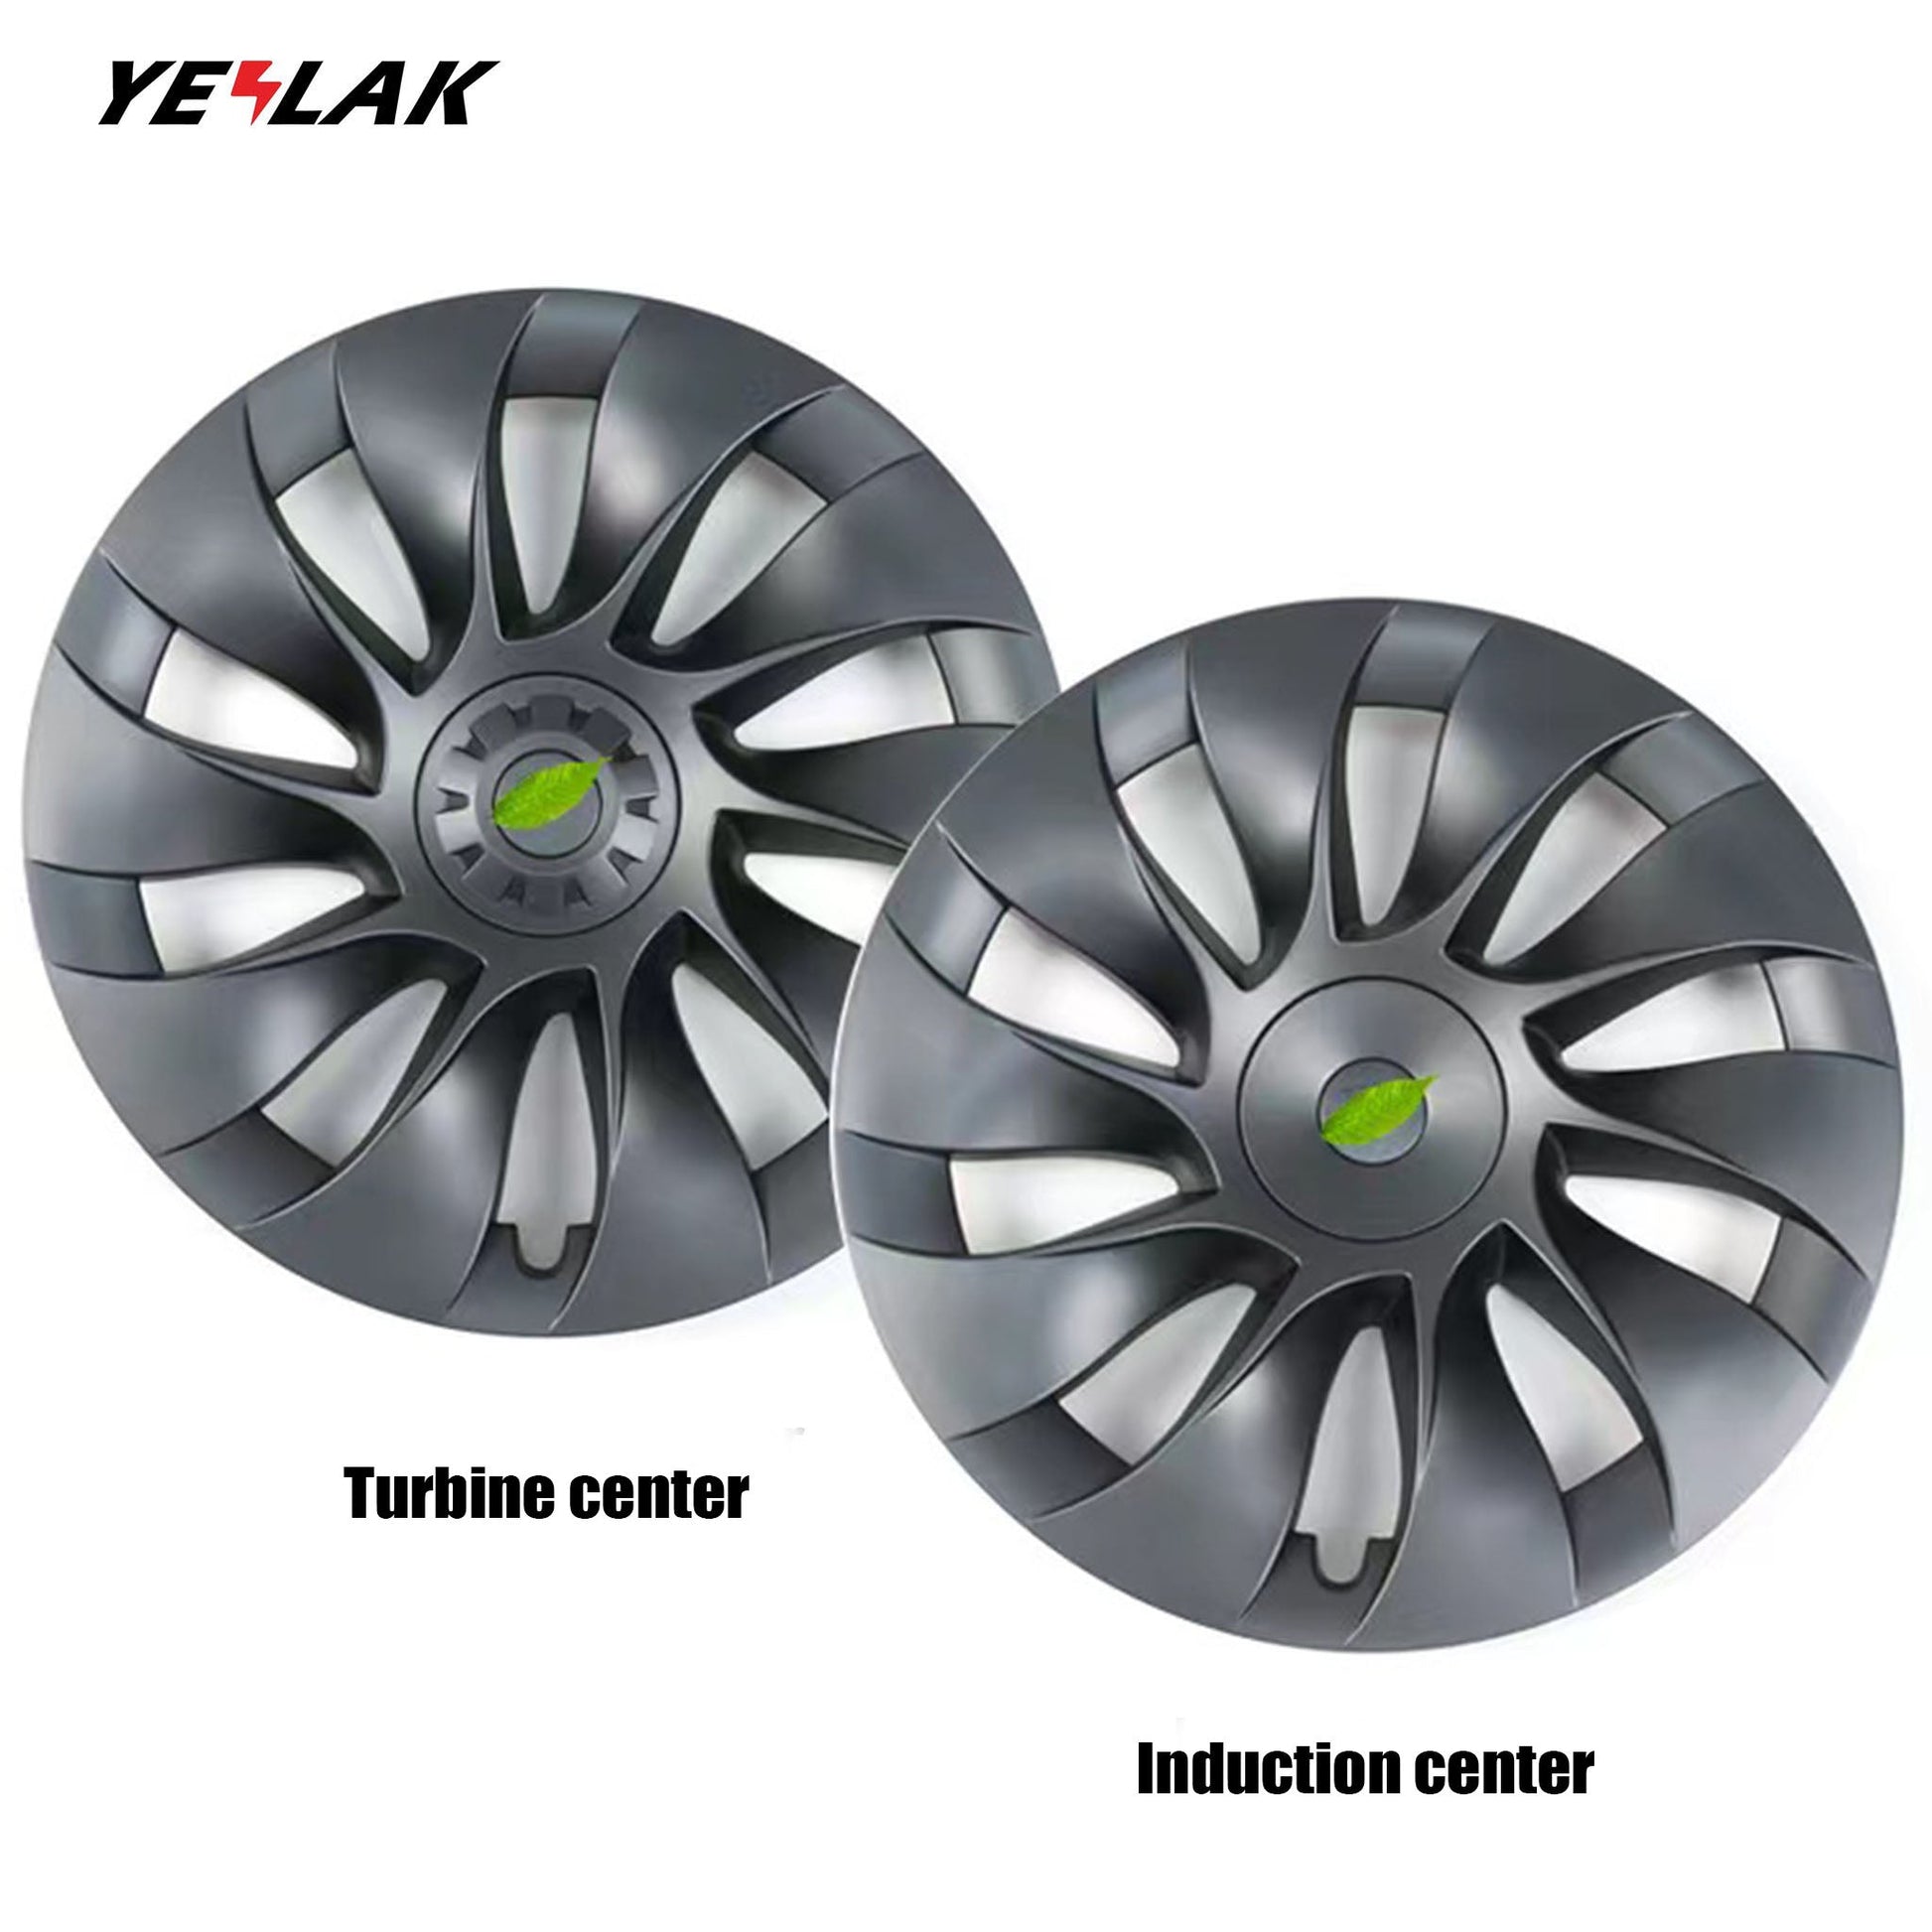 Performance hubcaps in turbine design for the Tesla Model 3